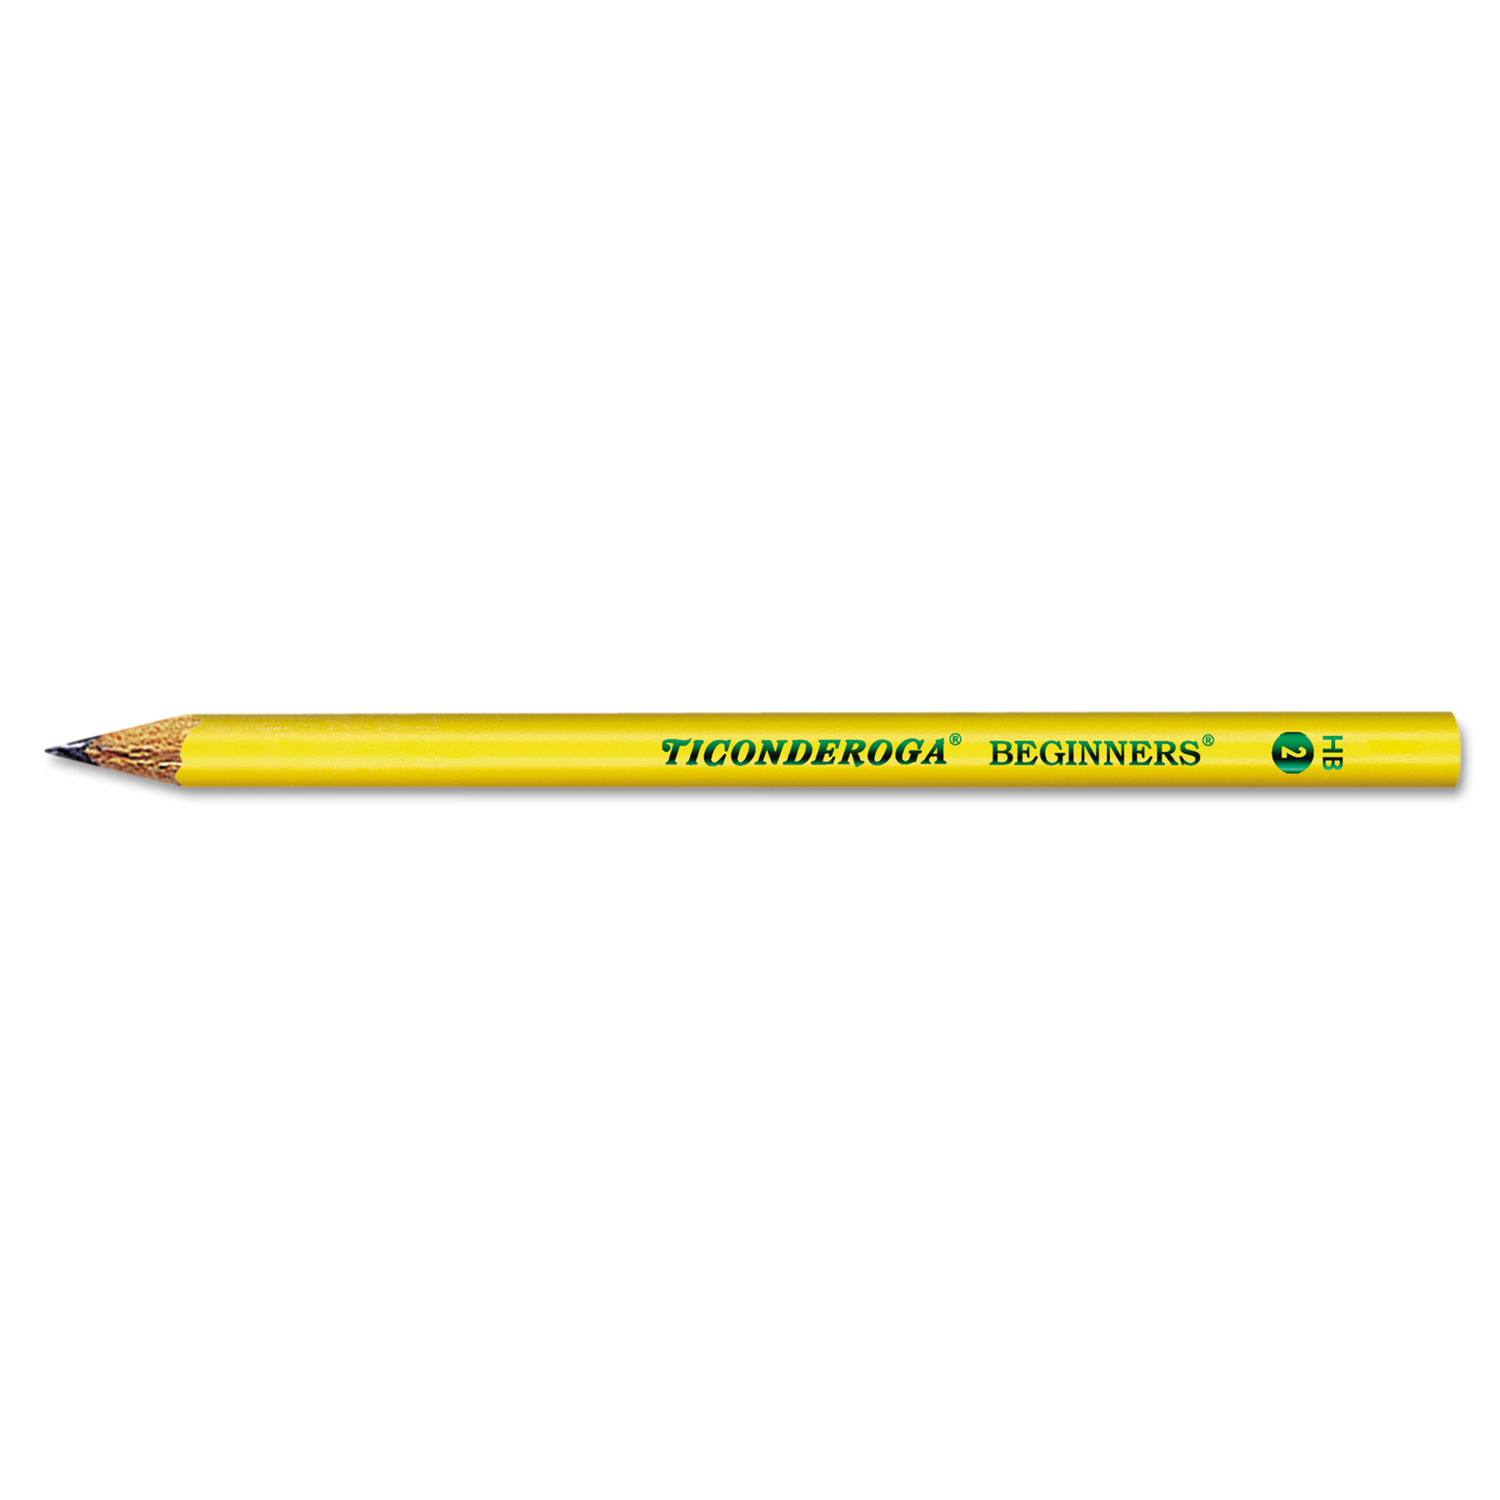  Dixon 13080 Ticonderoga Beginners Woodcase Pencil with Microban Protection, HB (#2), Black Lead, Yellow Barrel, Dozen (DIX13080) 